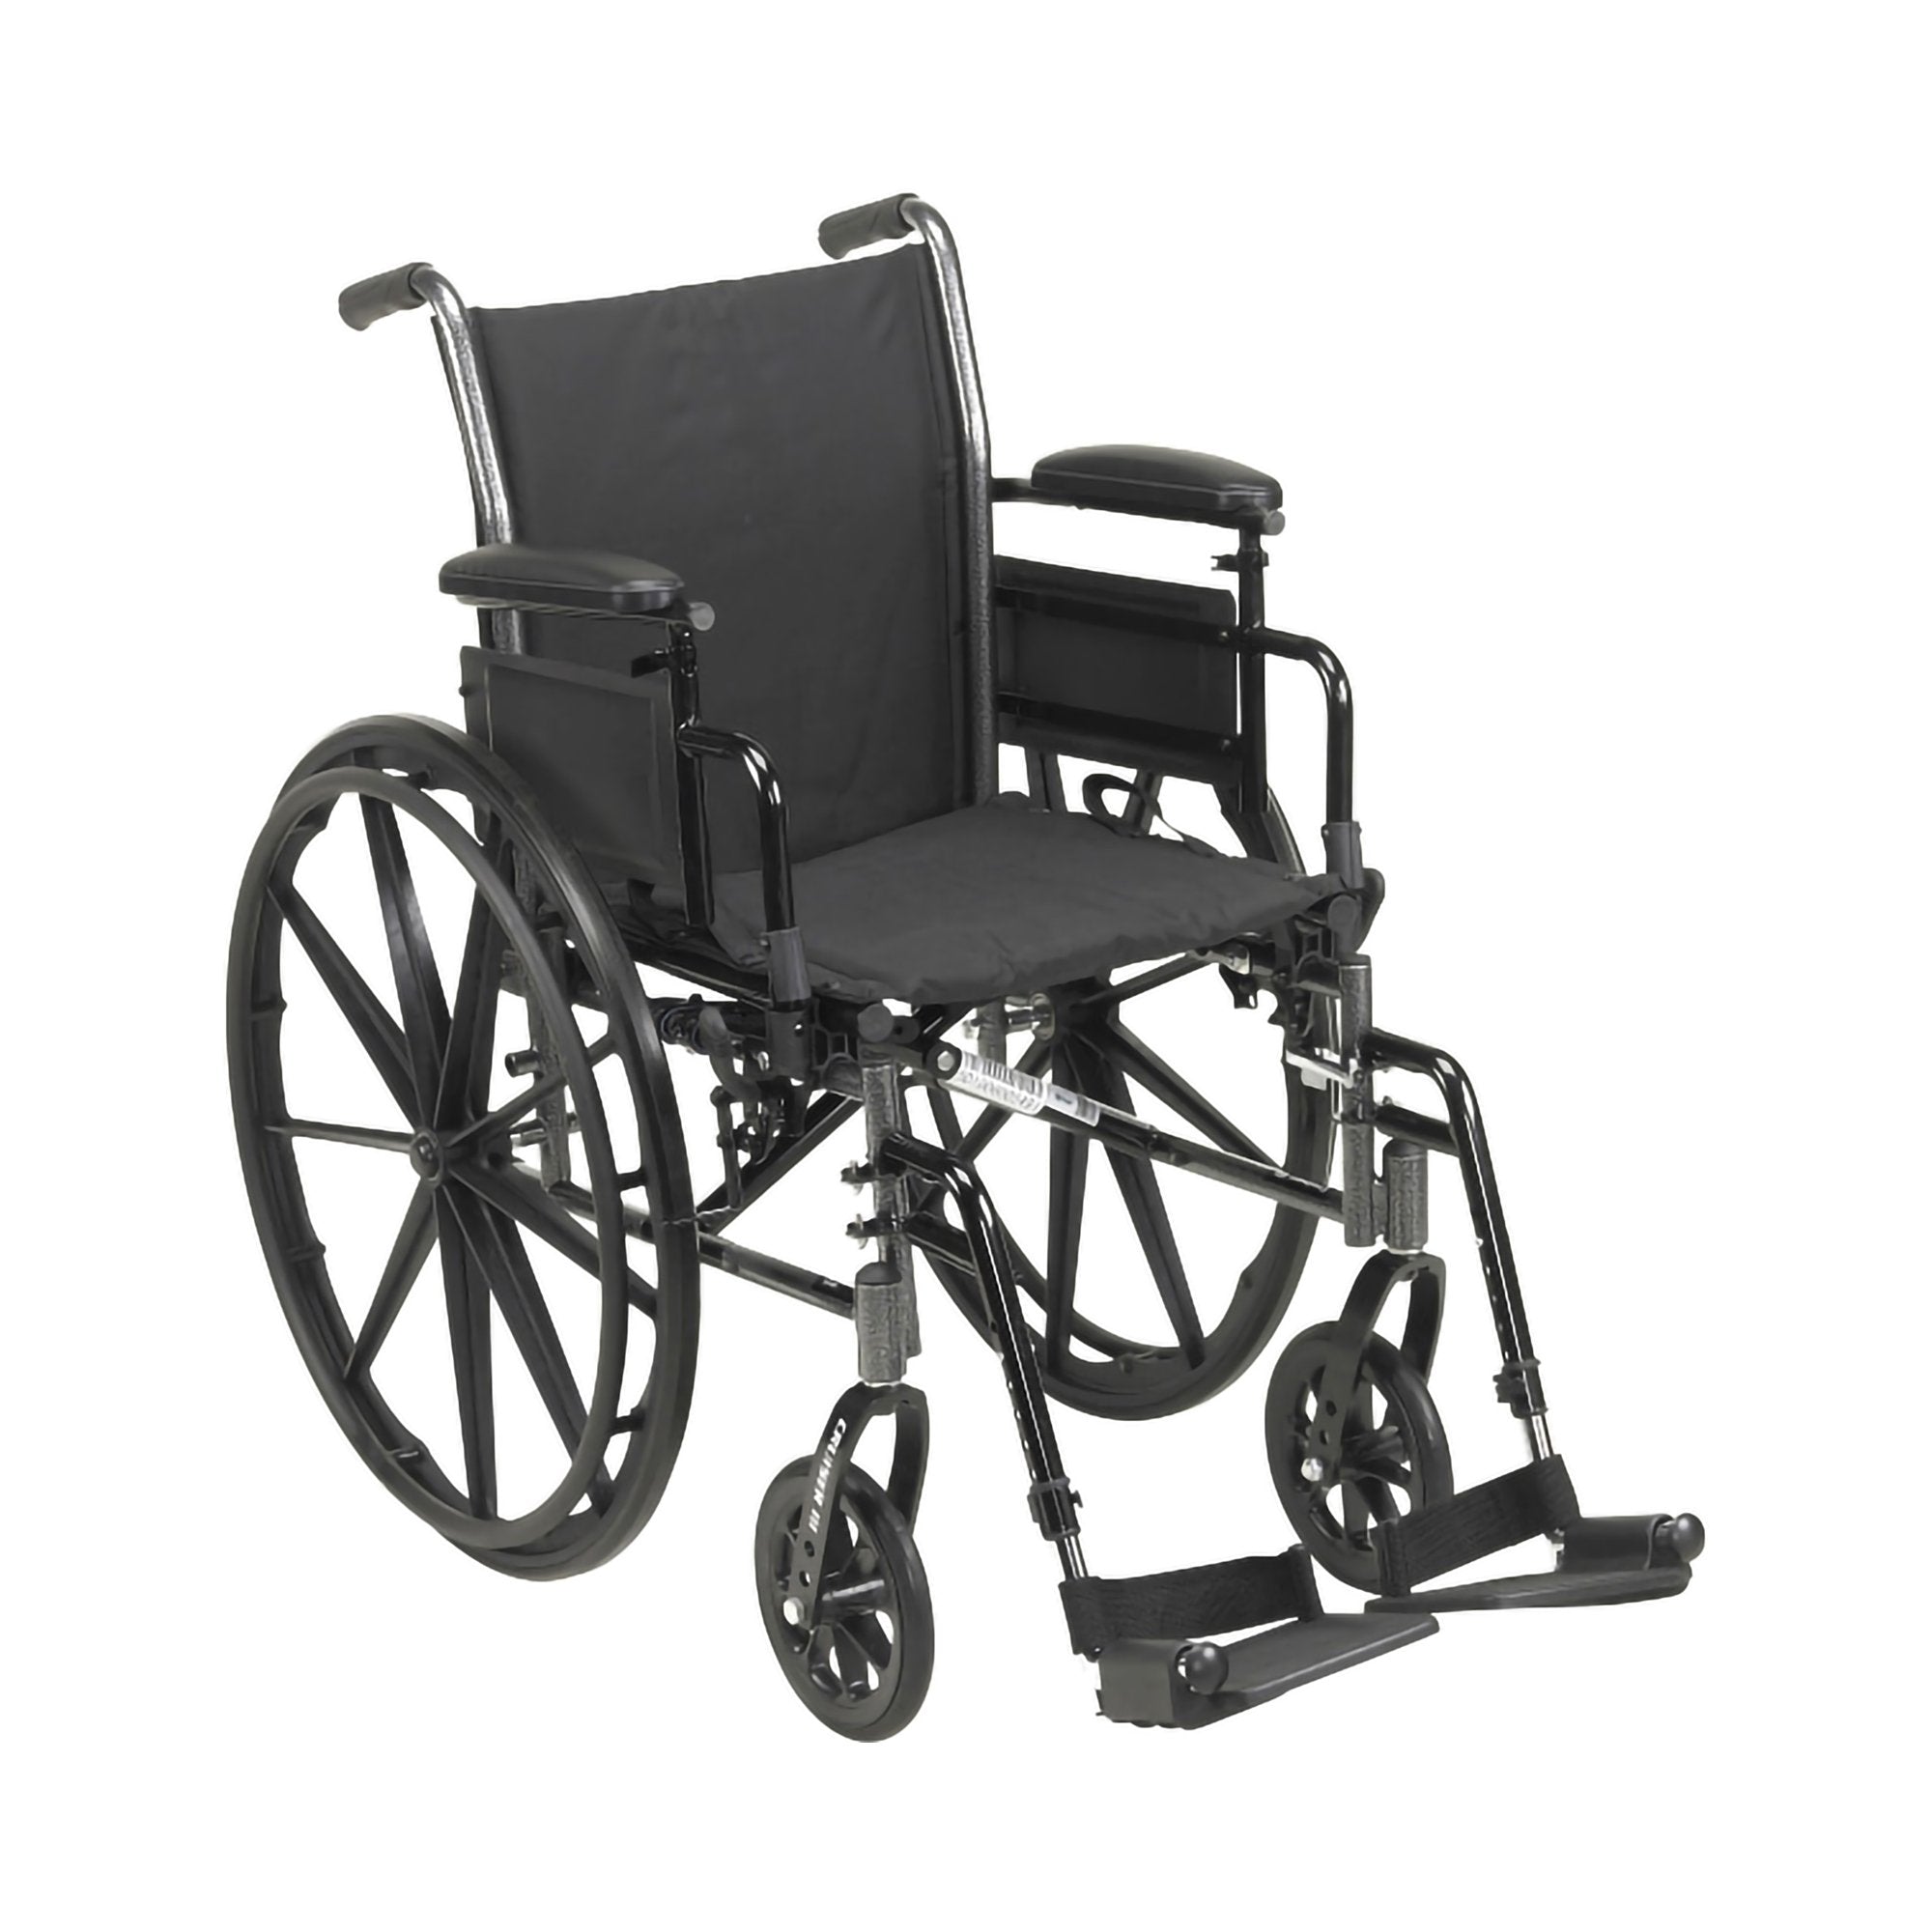 Mckesson Duel Axle Lightweight Wheelchair Desk Length Arm Swing-Away Footrest, 20 Inch -Each